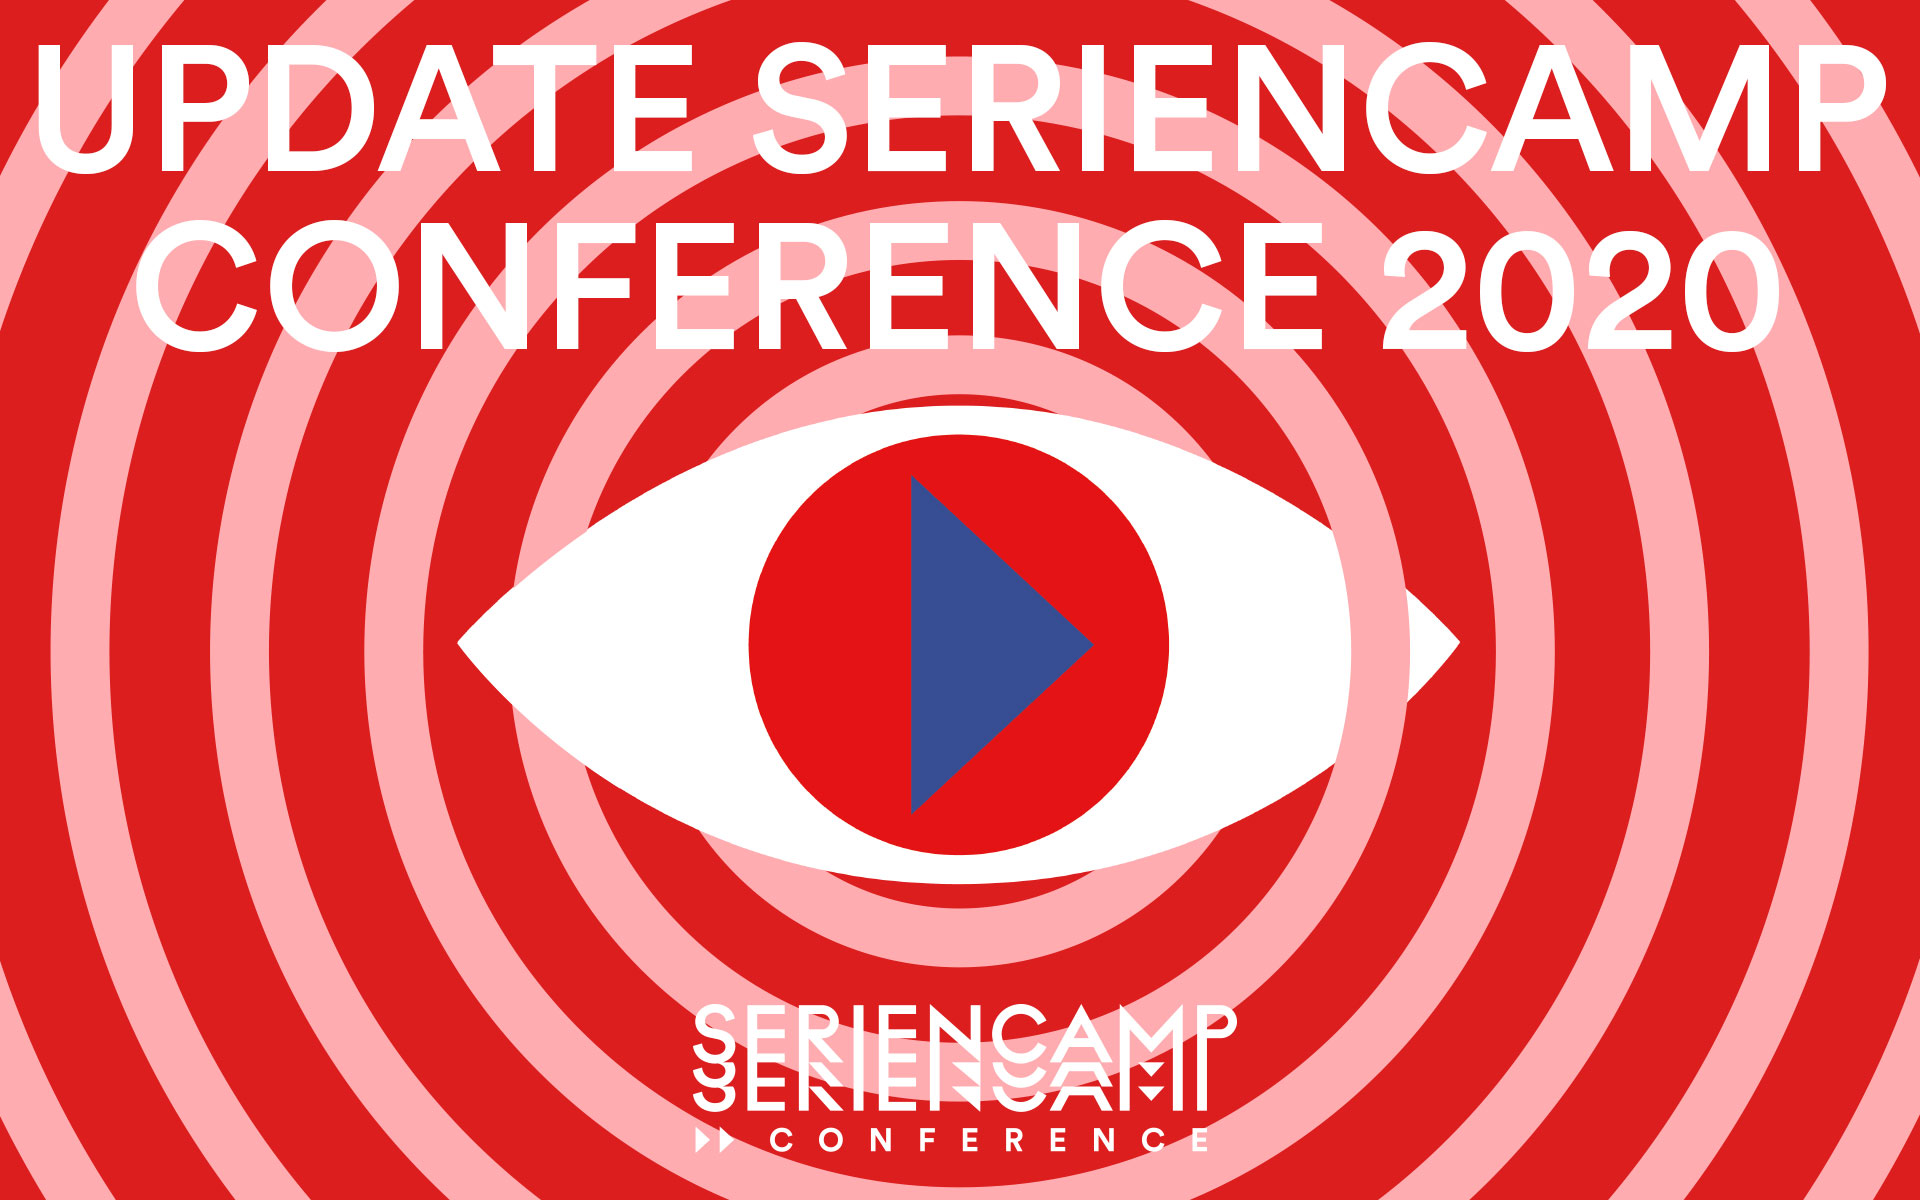 01_SC_Conference_WebsiteNews1920_UPDATE-SERIENCAMP-CONFERENCE-2020